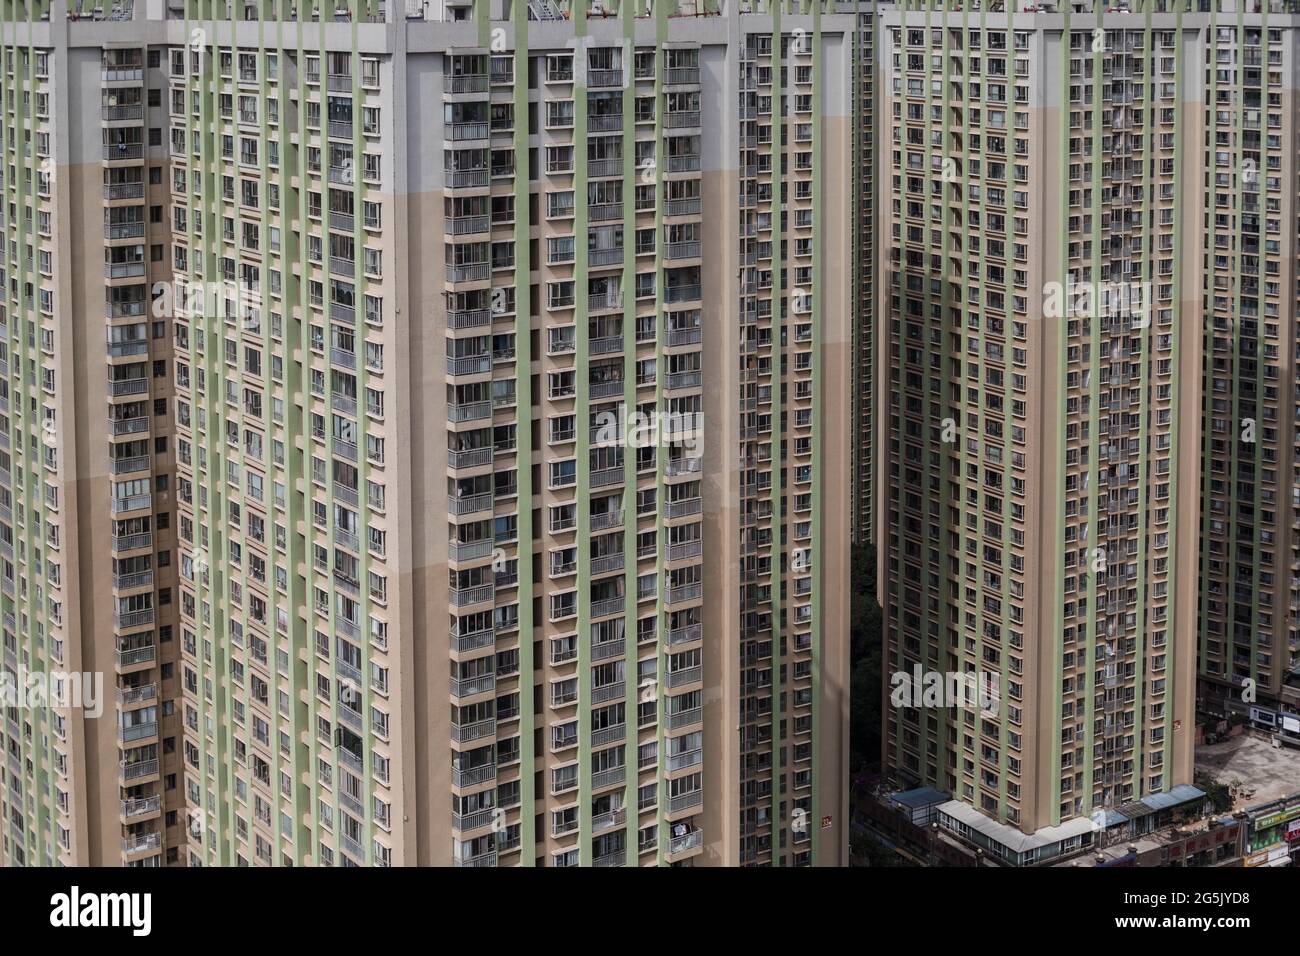 Edifici residenziali alti affollati insieme in Cina Foto Stock